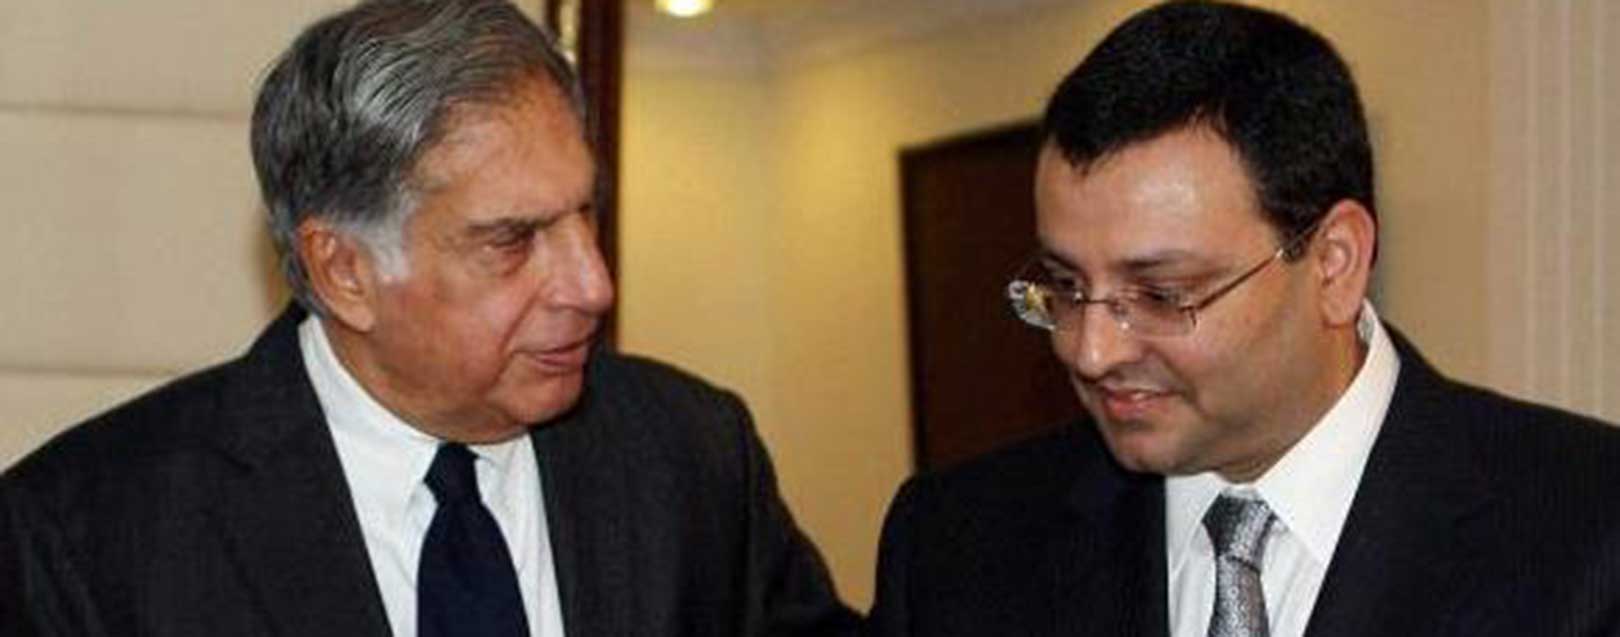 Tata Sons sacks Mistry as Chairman; Ratan Tata returns